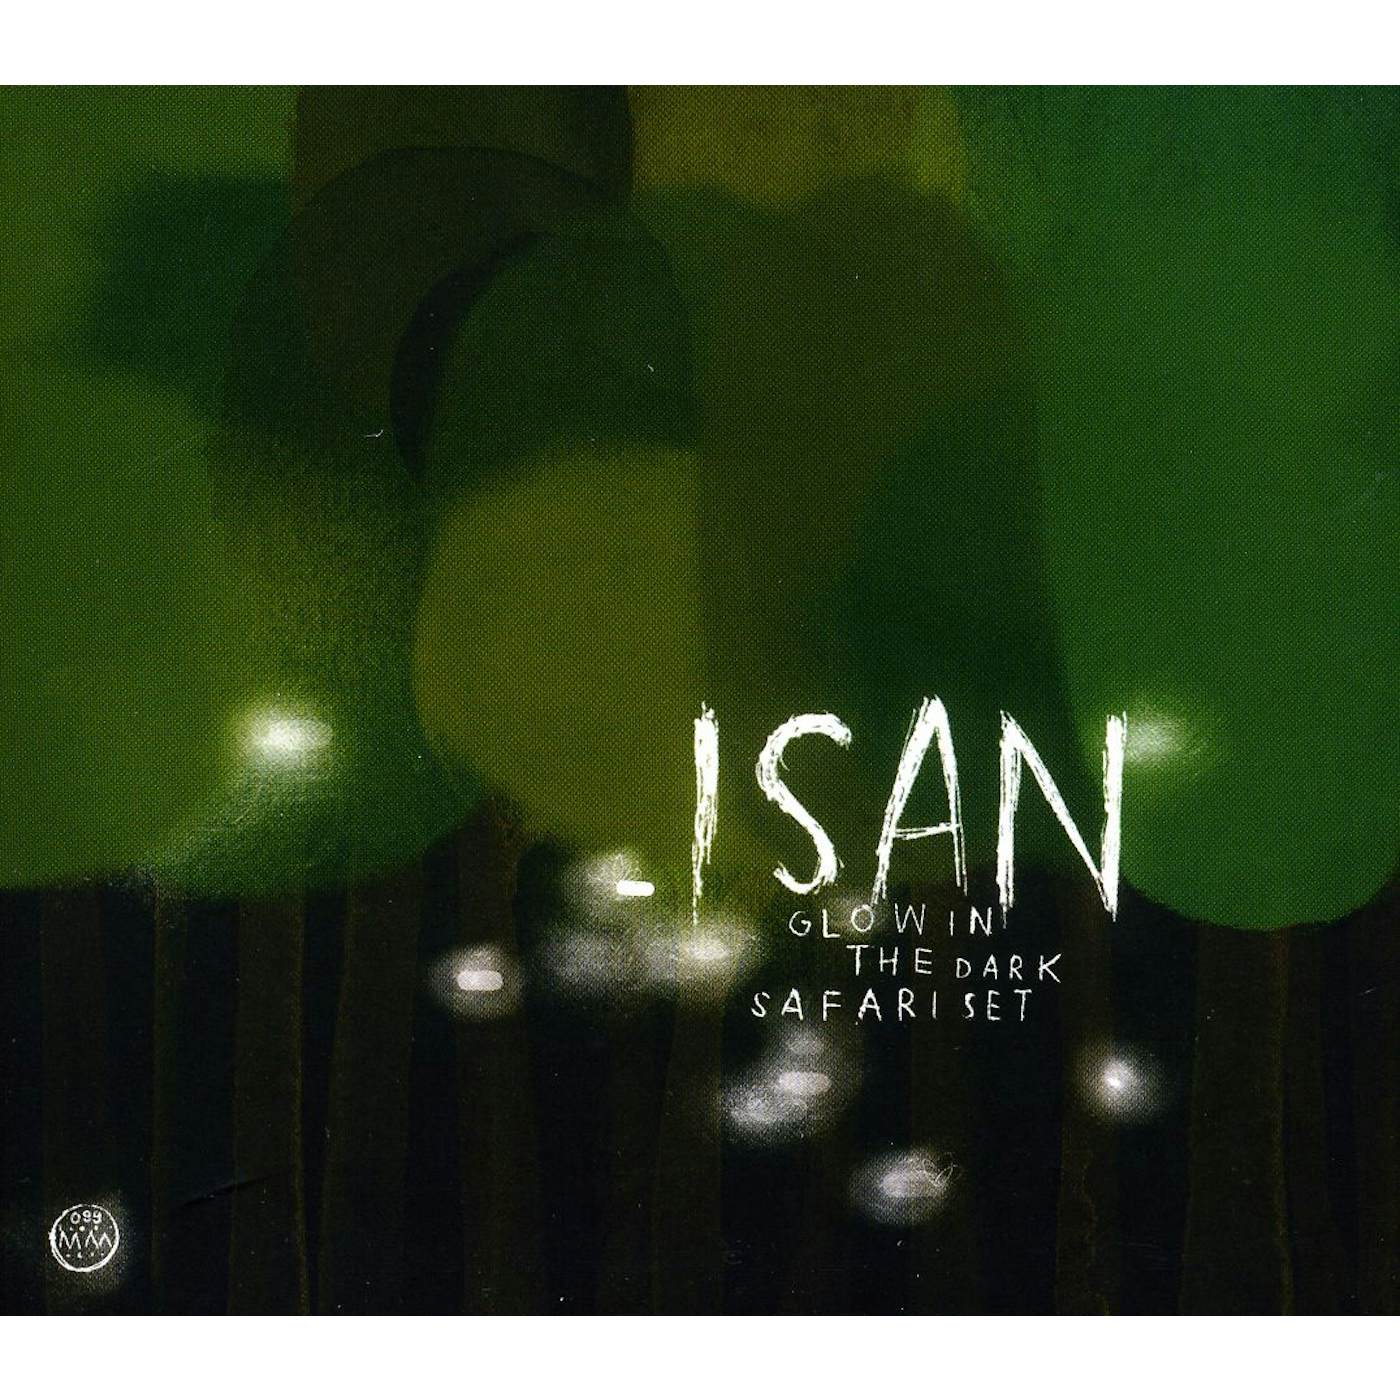 Isan GLOW IN THE DARK SAFARI SET CD